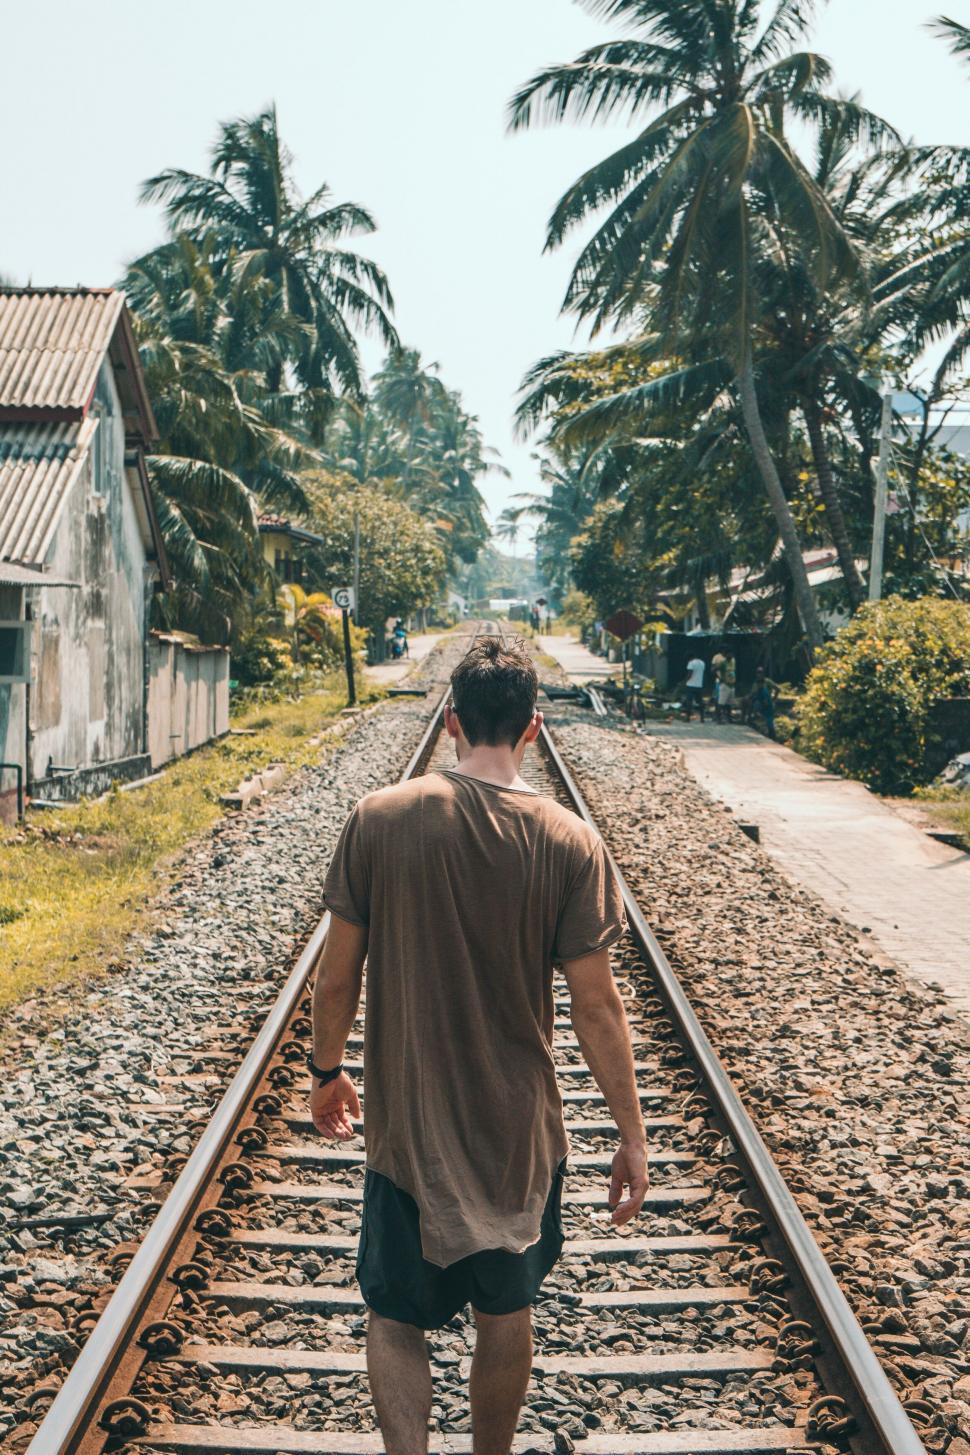 Free Image of Man walking along tropical railway tracks 